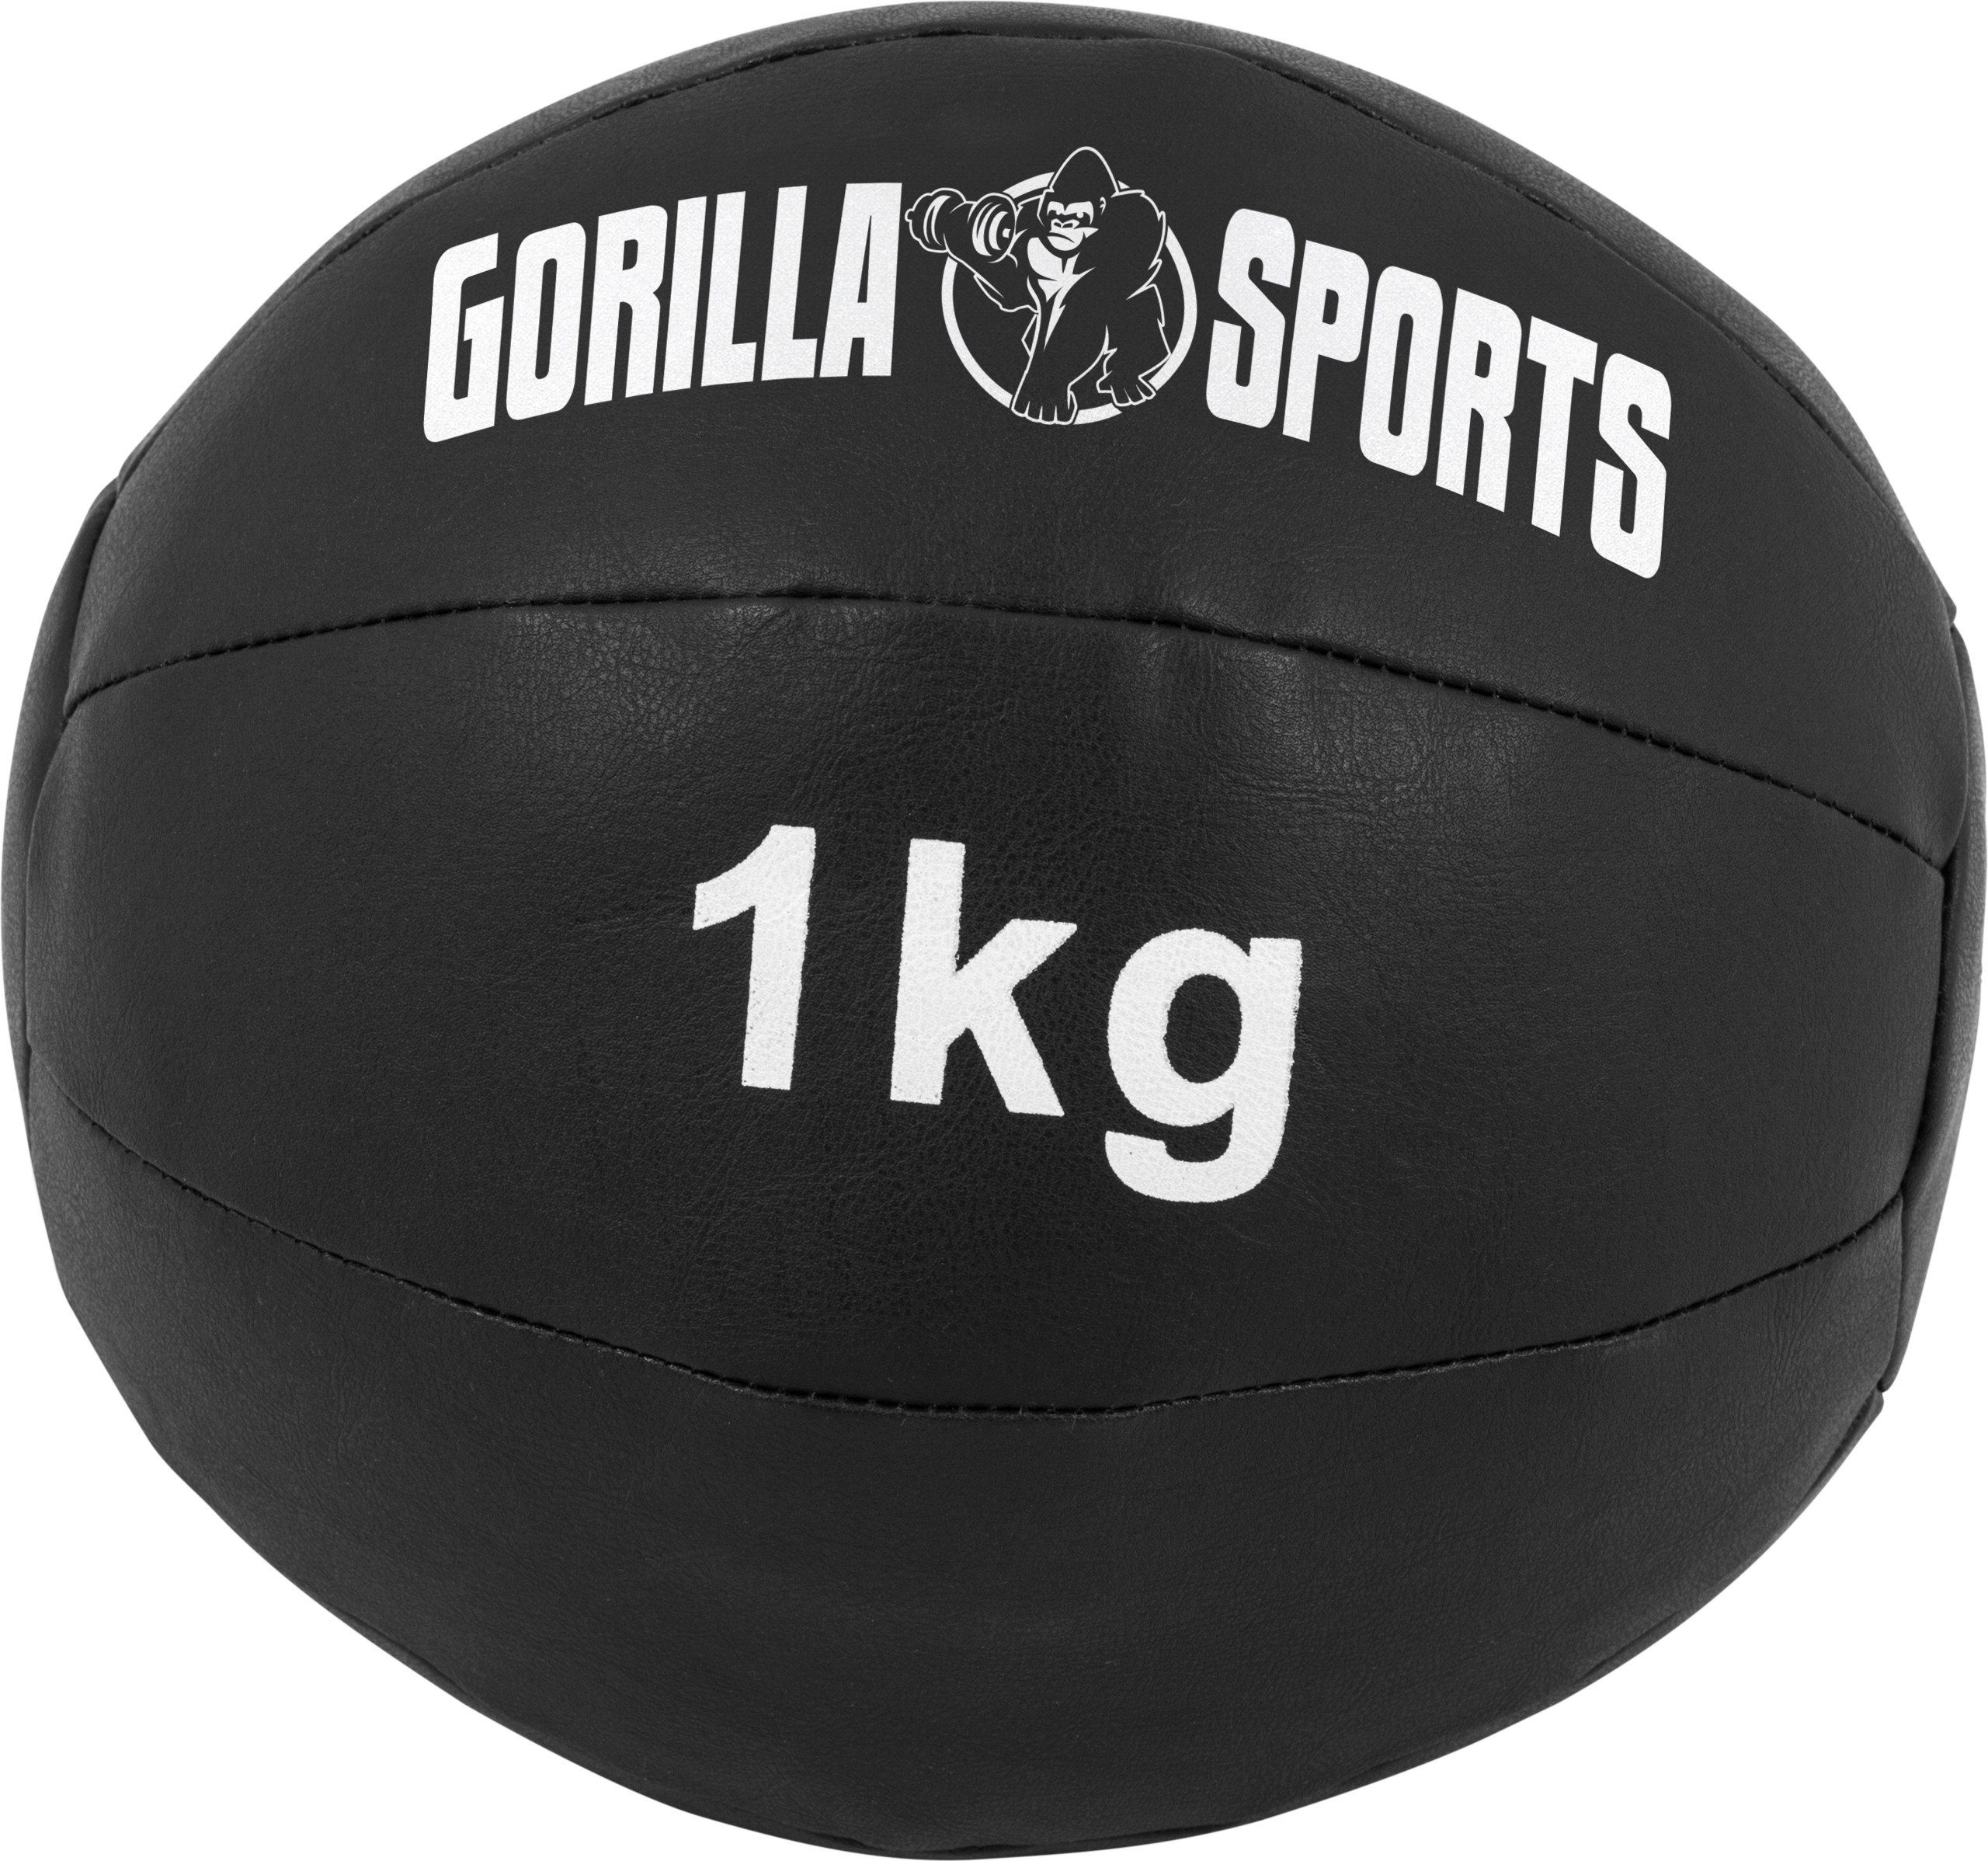 1 Fitnessball, Trainingsball, SPORTS Einzeln/Set, 29cm, aus Medizinball Gewichtsball Leder, GORILLA kg